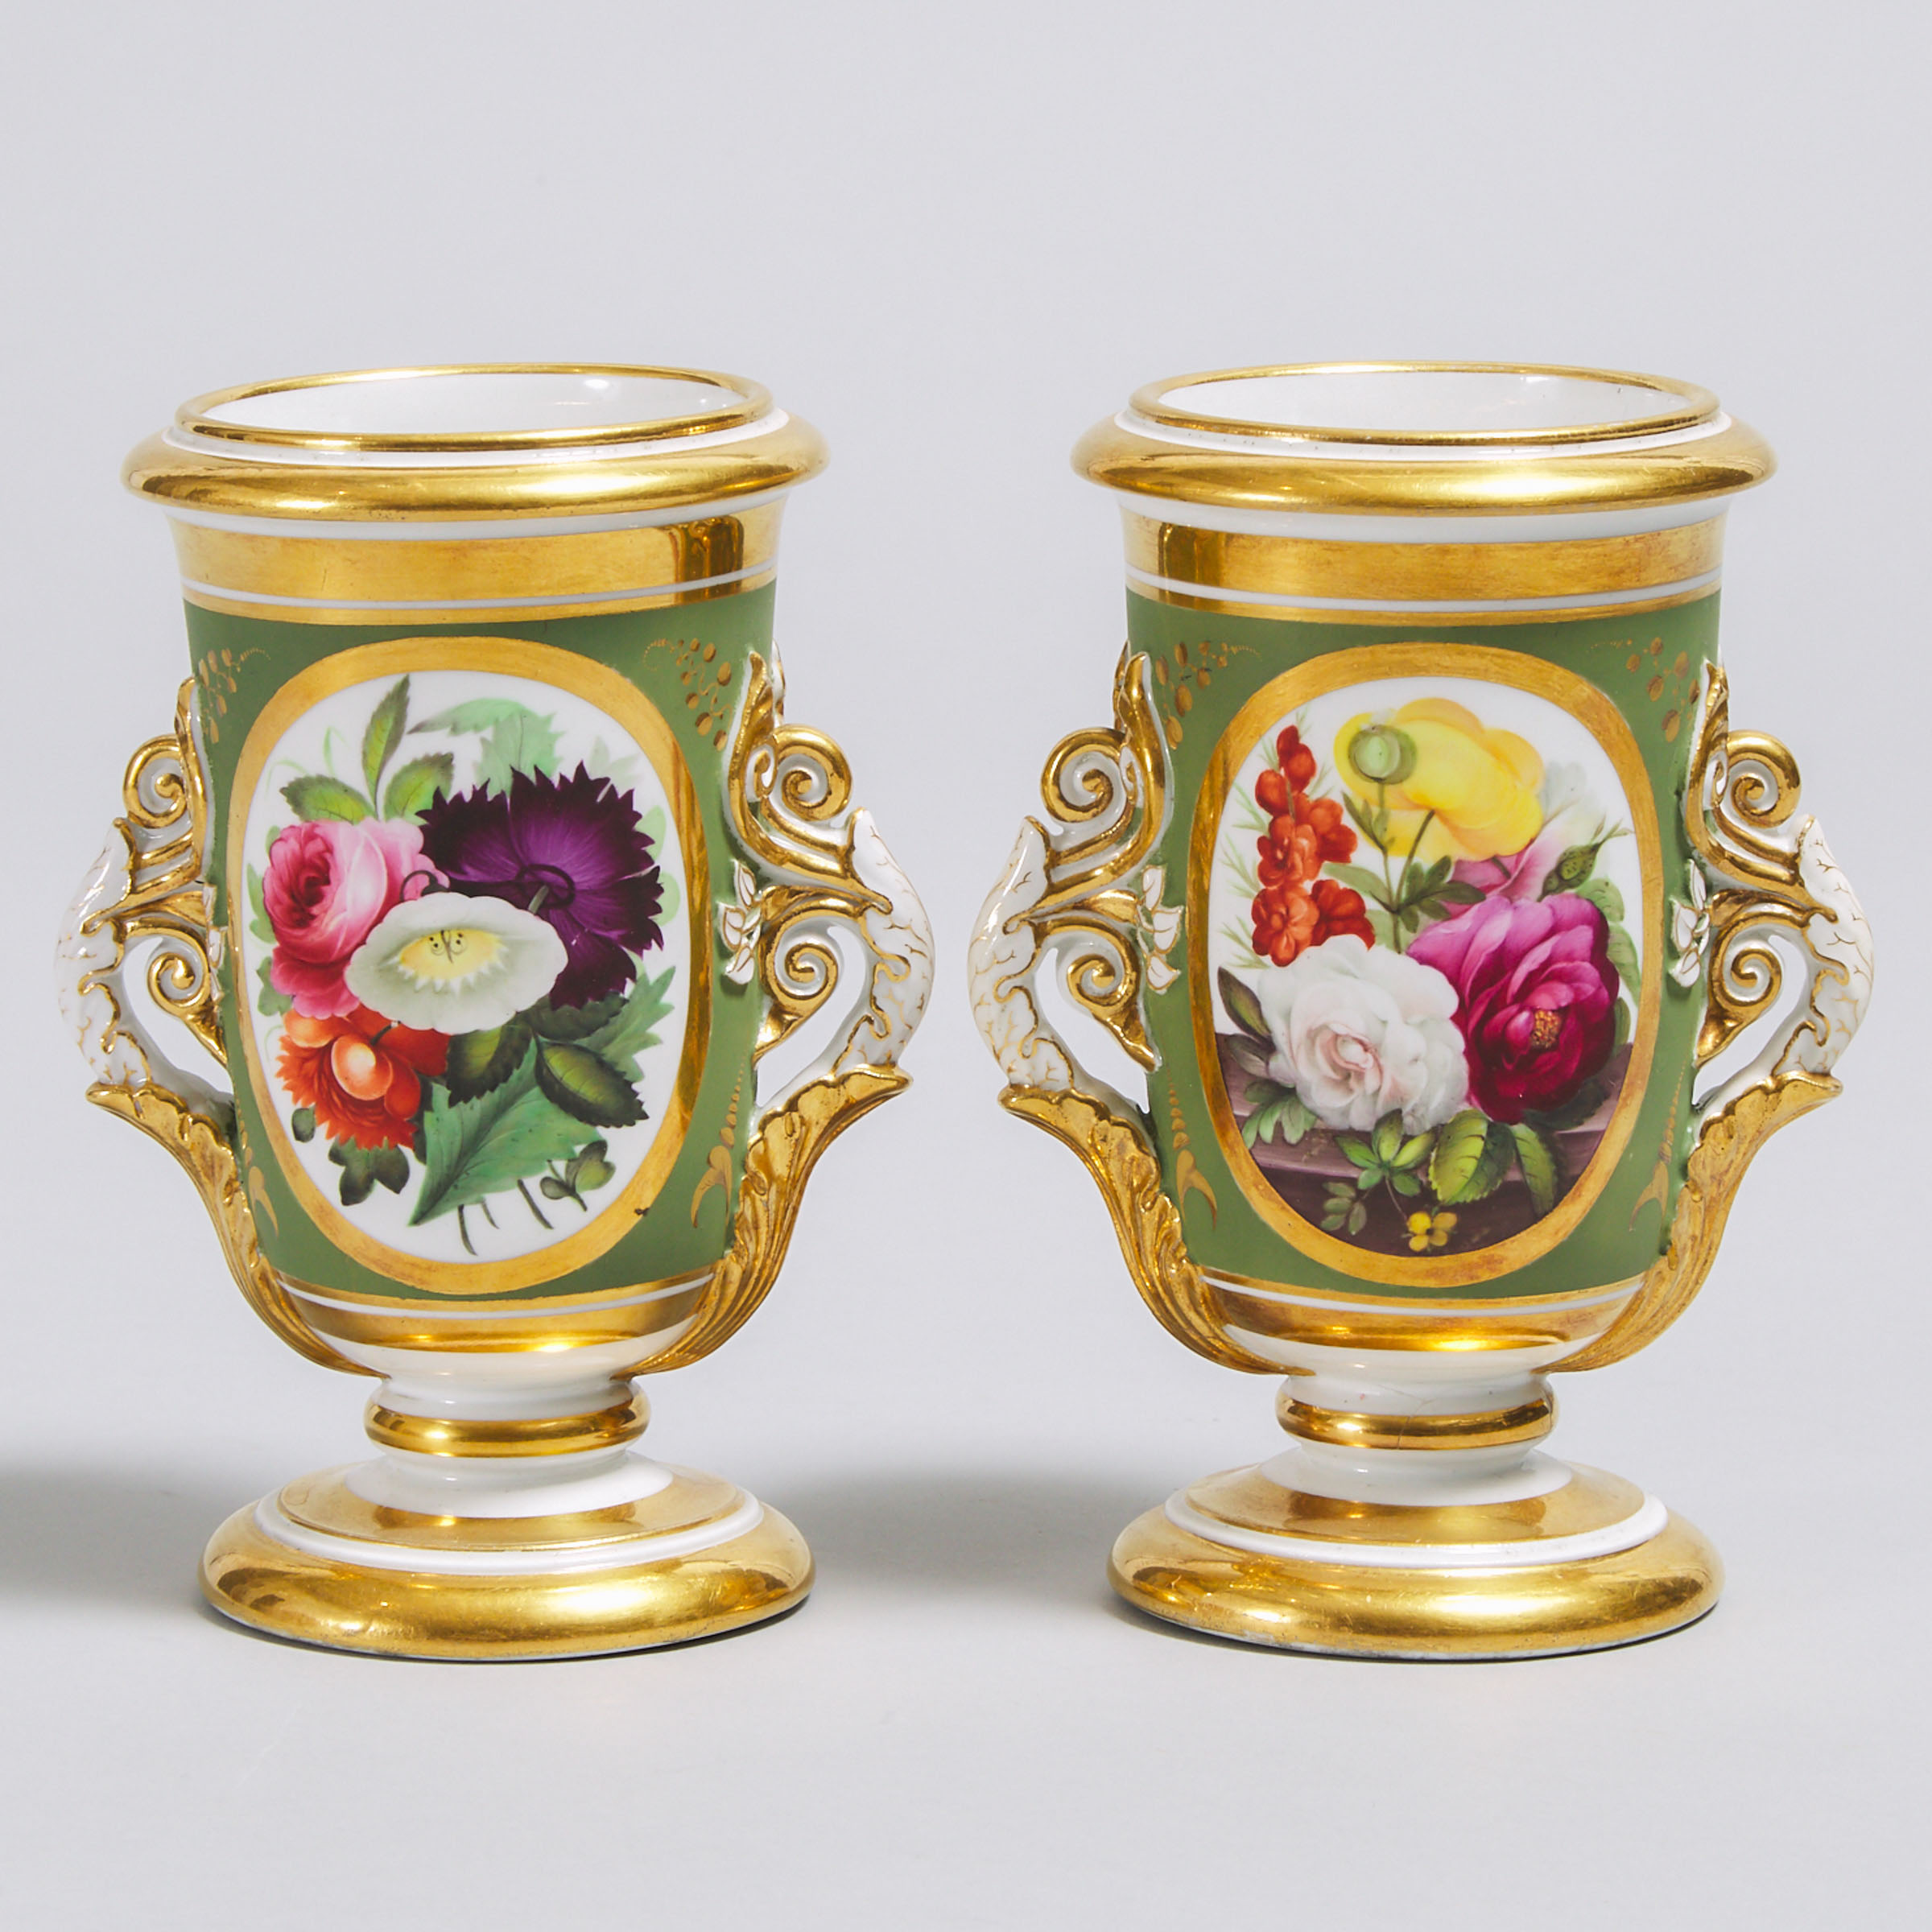 Pair of Ridgway Matt Green and Gilt Ground Spill Vases, c.1825